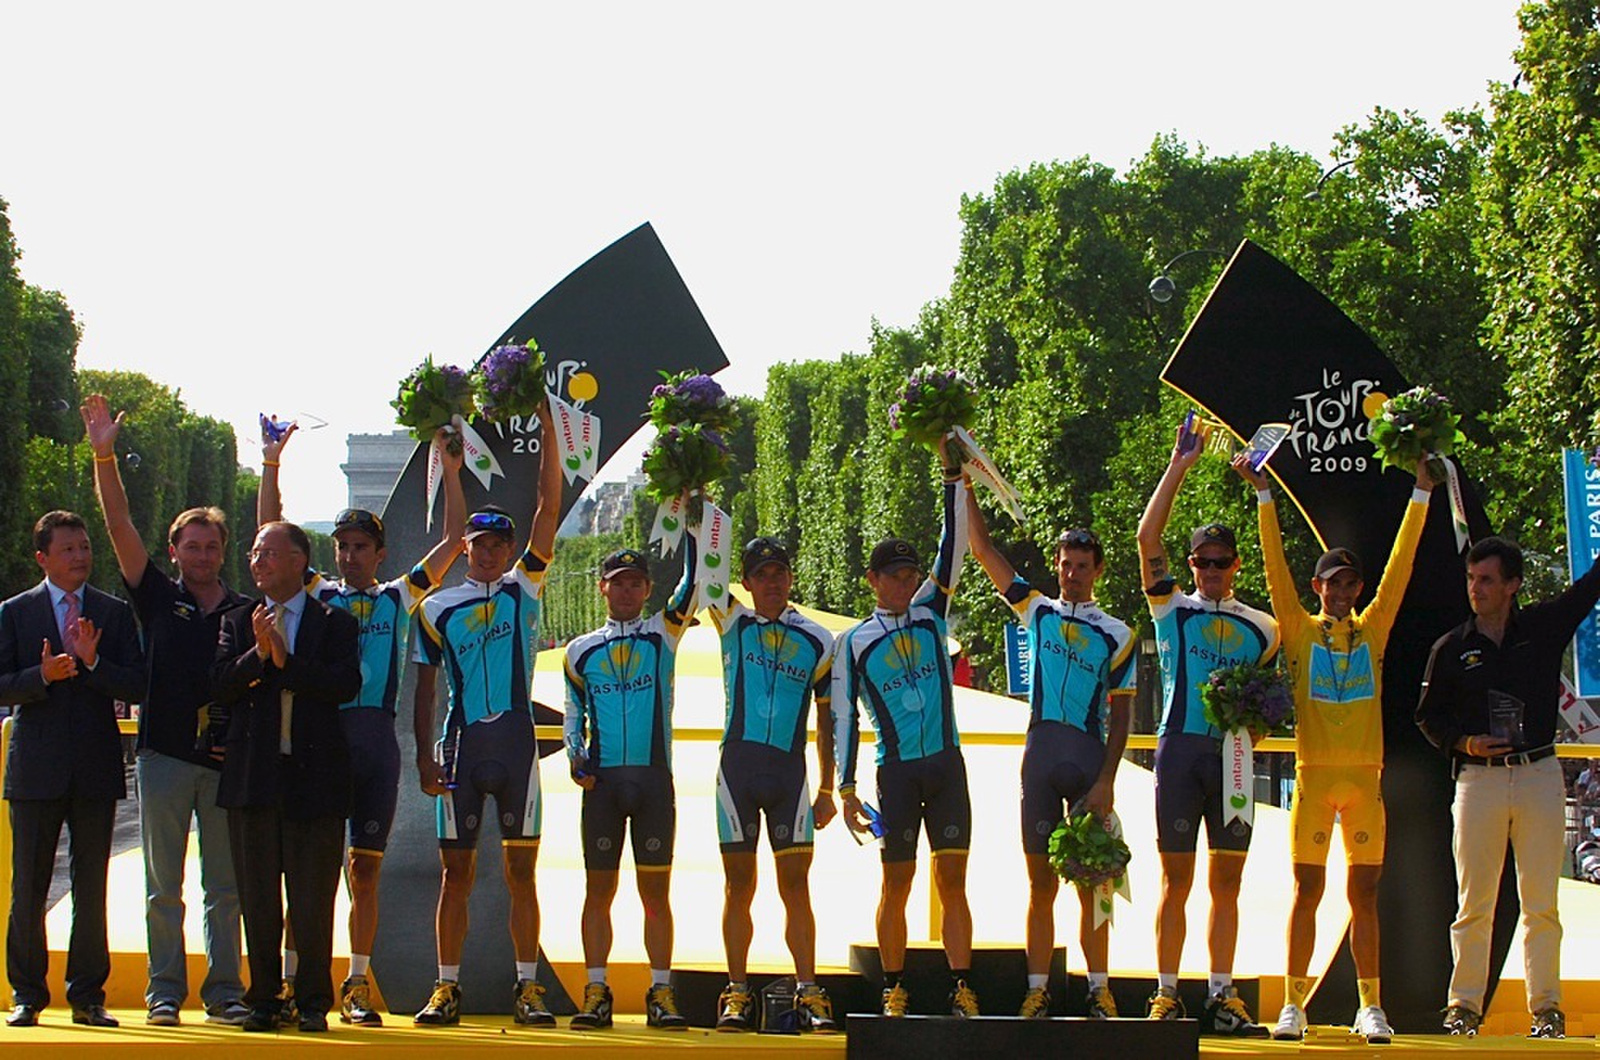 352 - Tour de France - Astana csapata